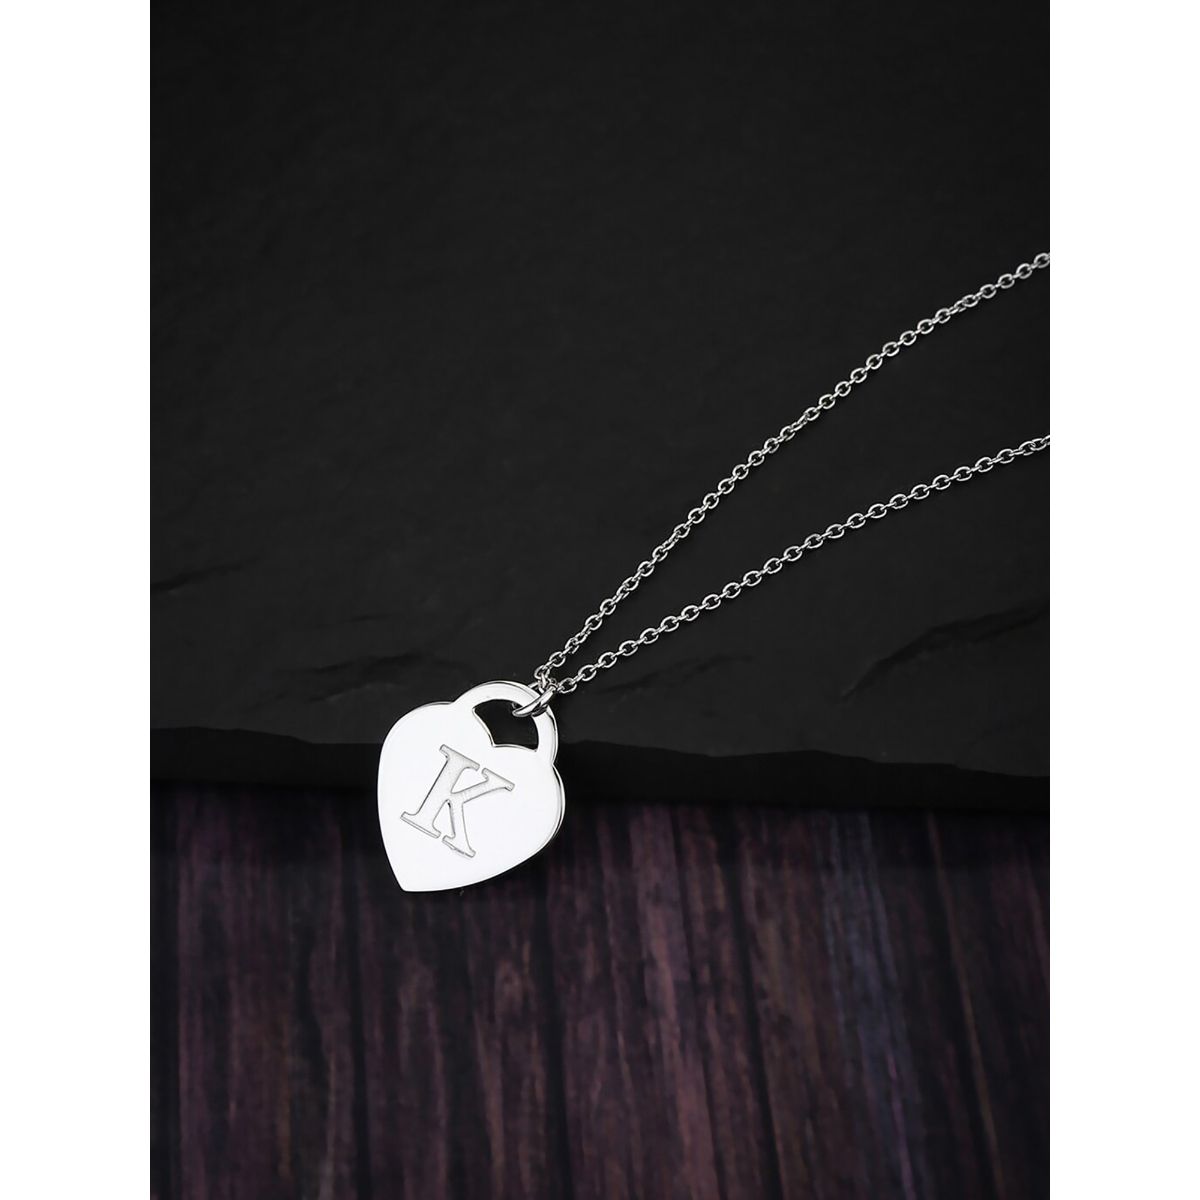 Tiffany & Co. Elsa Peretti Letter K pendant Necklace Charm Initial K silver  925 | eBay